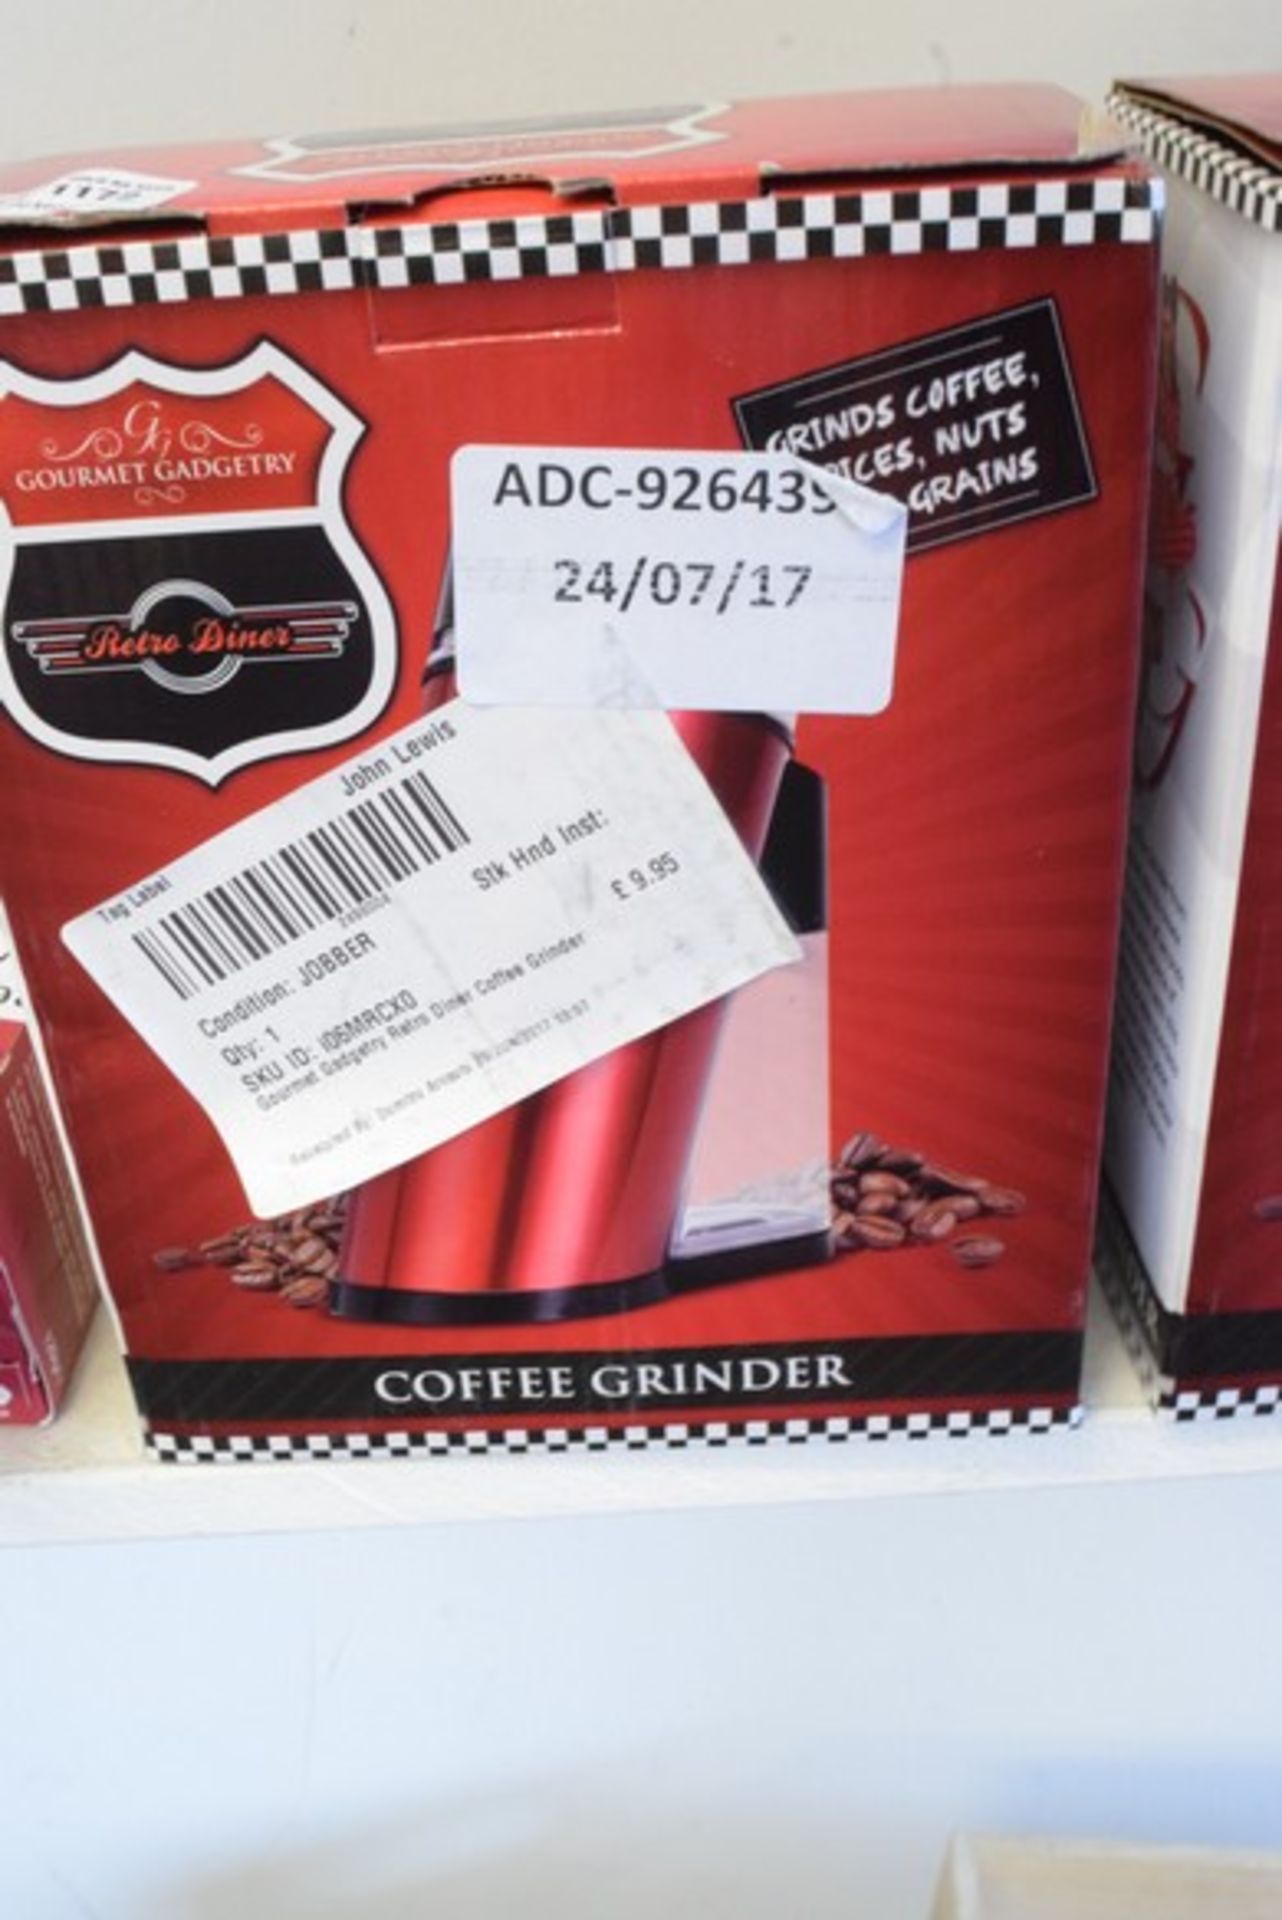 1 x BOXED GOURMET GADGETRY RETRO DINER COFFEE GRINDER RRP £10 24/07/17 *PLEASE NOTE THAT THE BID